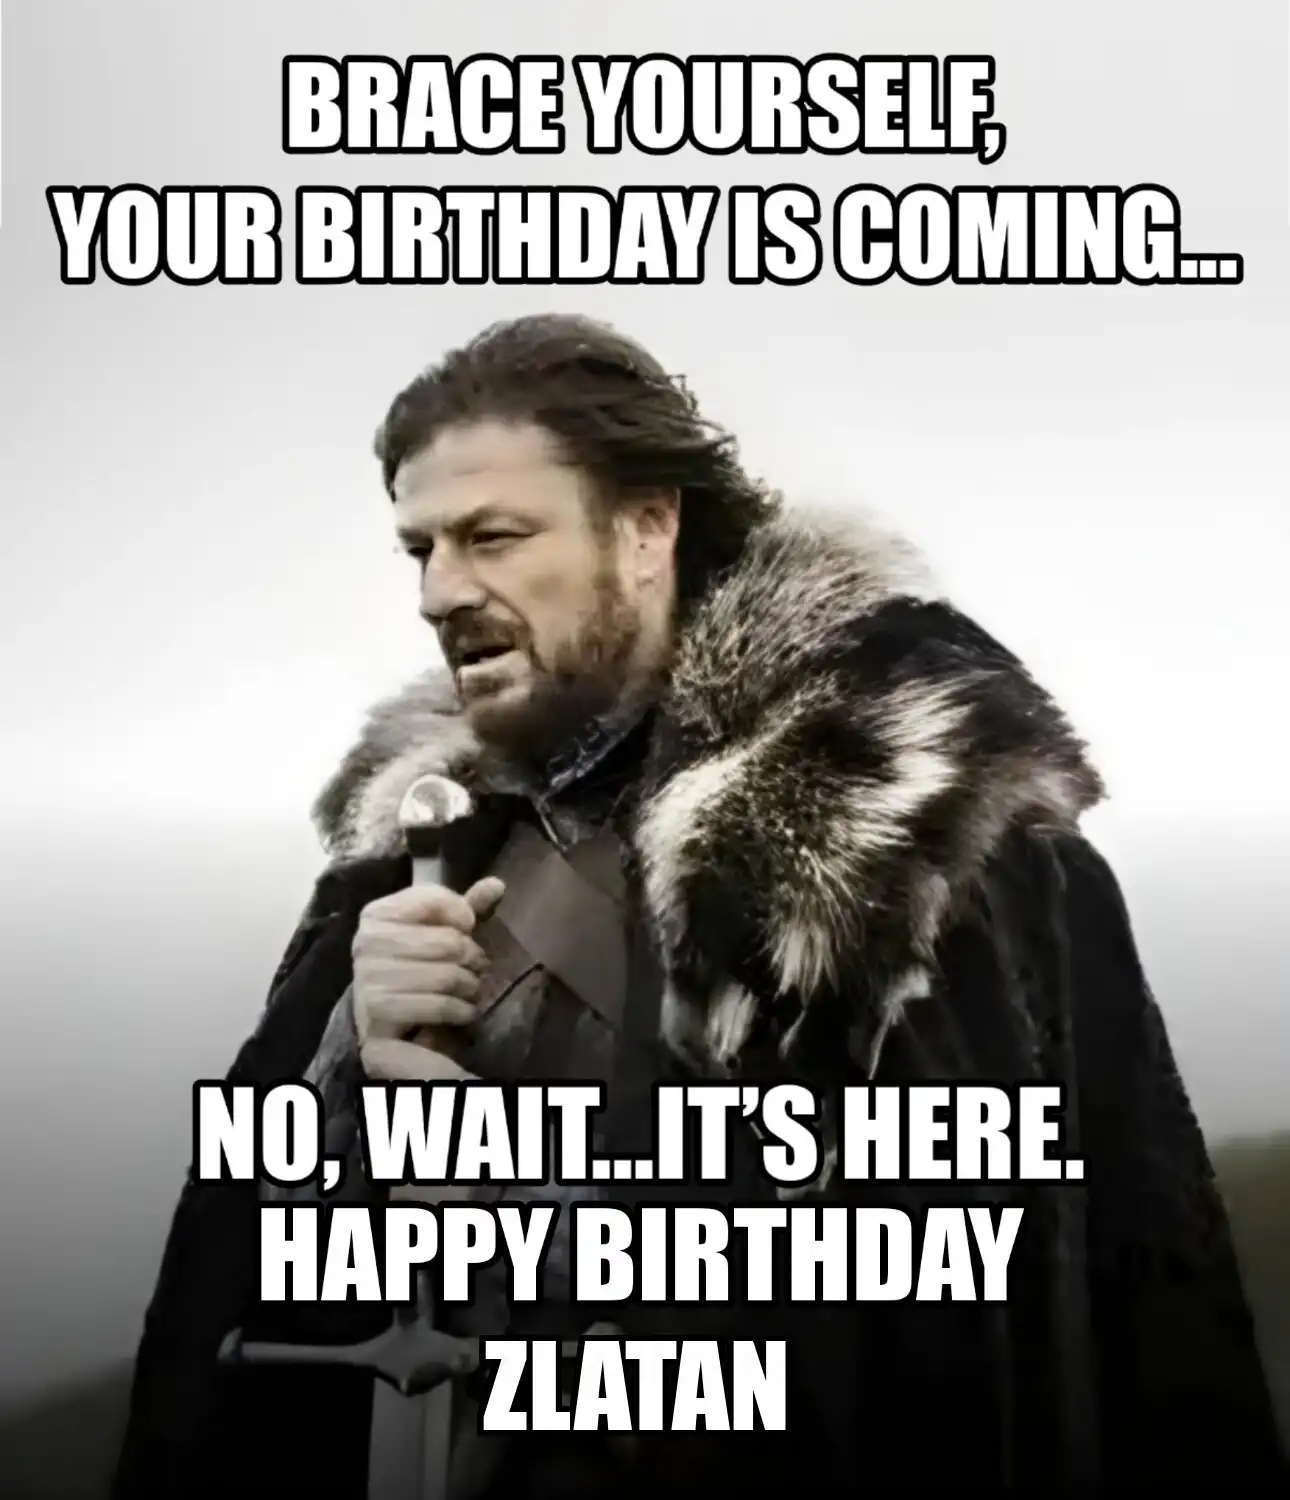 Happy Birthday Zlatan Brace Yourself Your Birthday Is Coming Meme